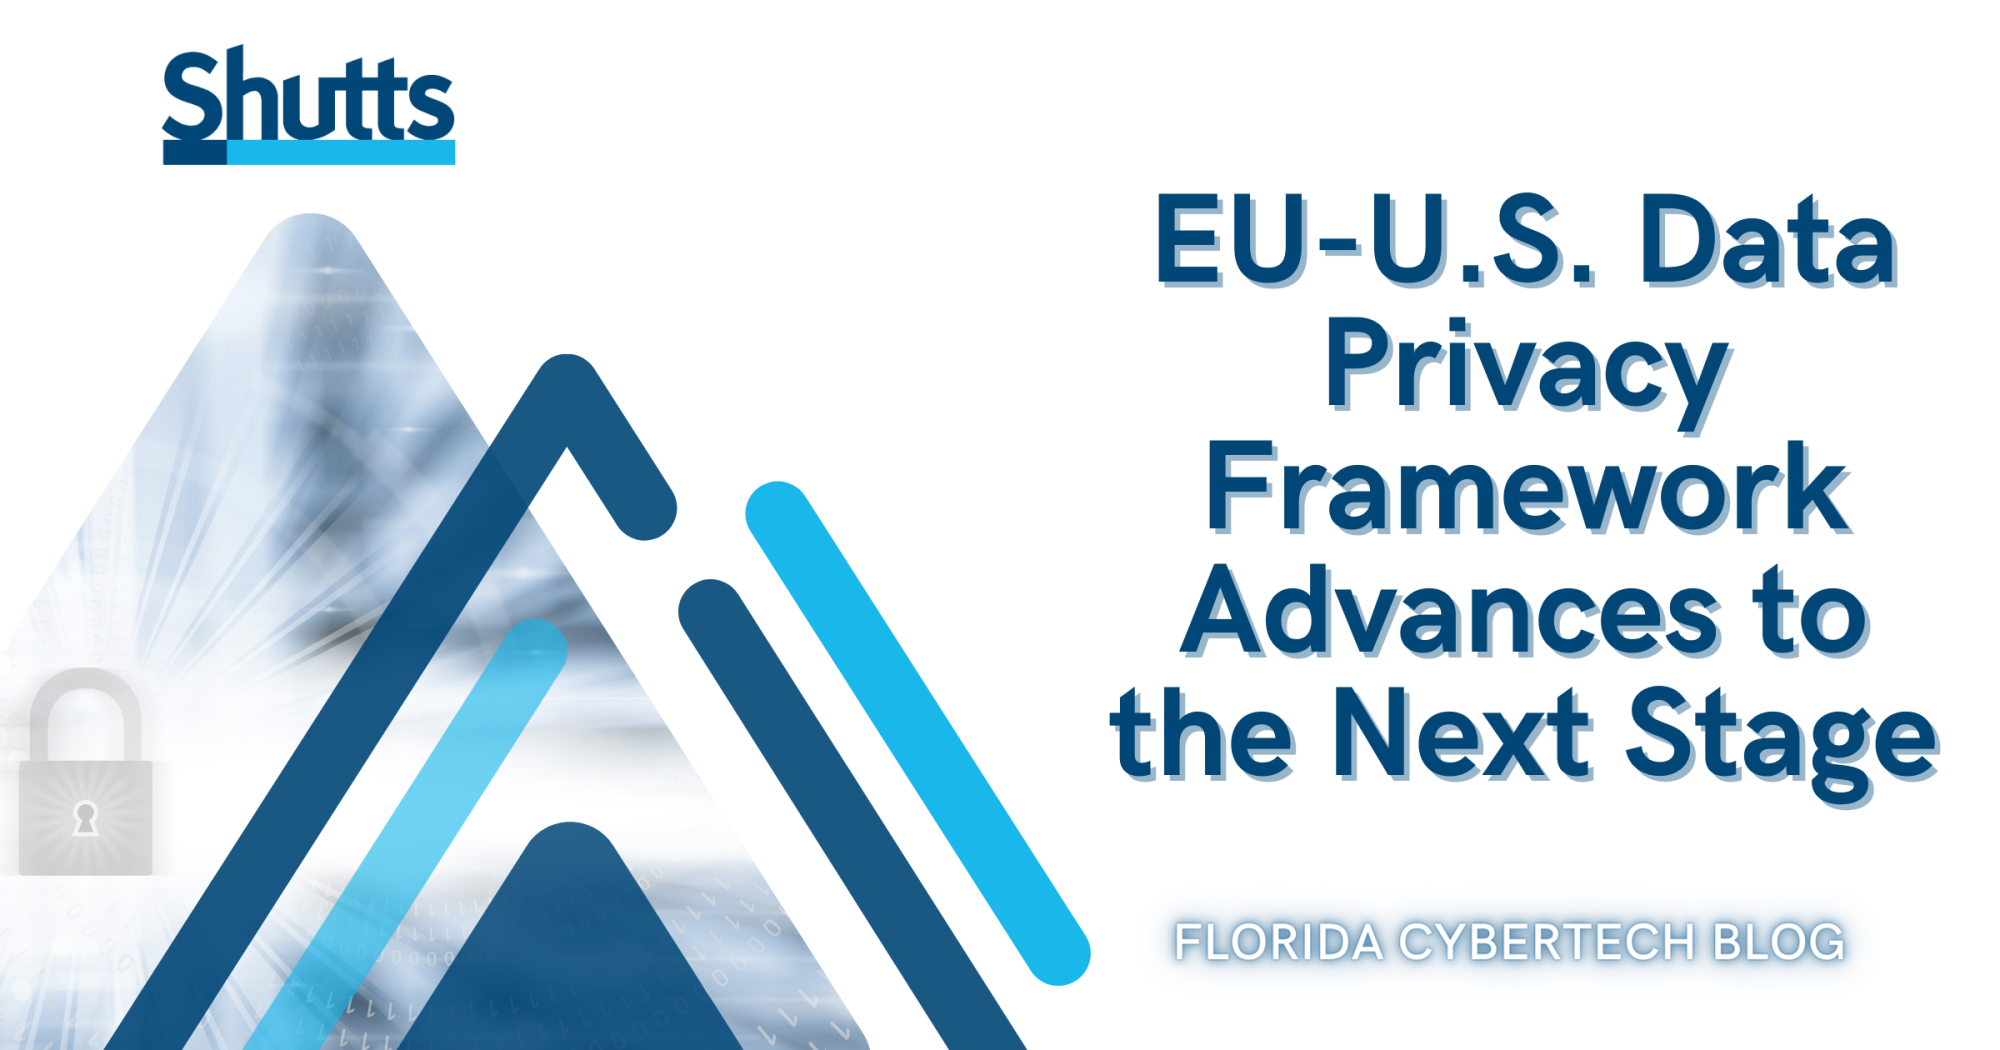 EU-U.S. Data Privacy Framework Advances to the Next Stage